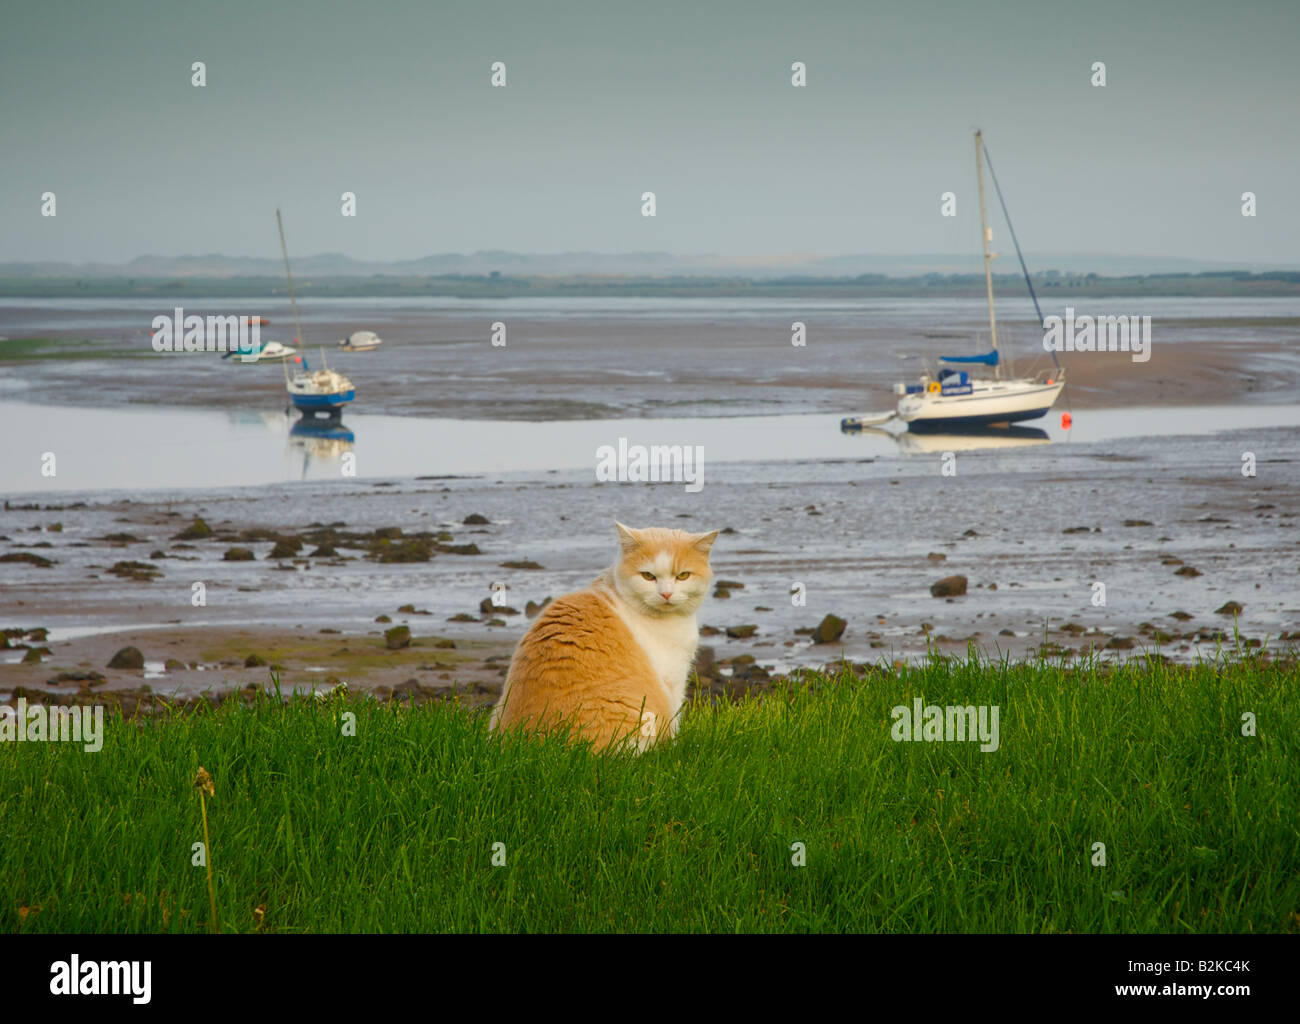 cat-sitting-on-grass-with-muddy-estuary-